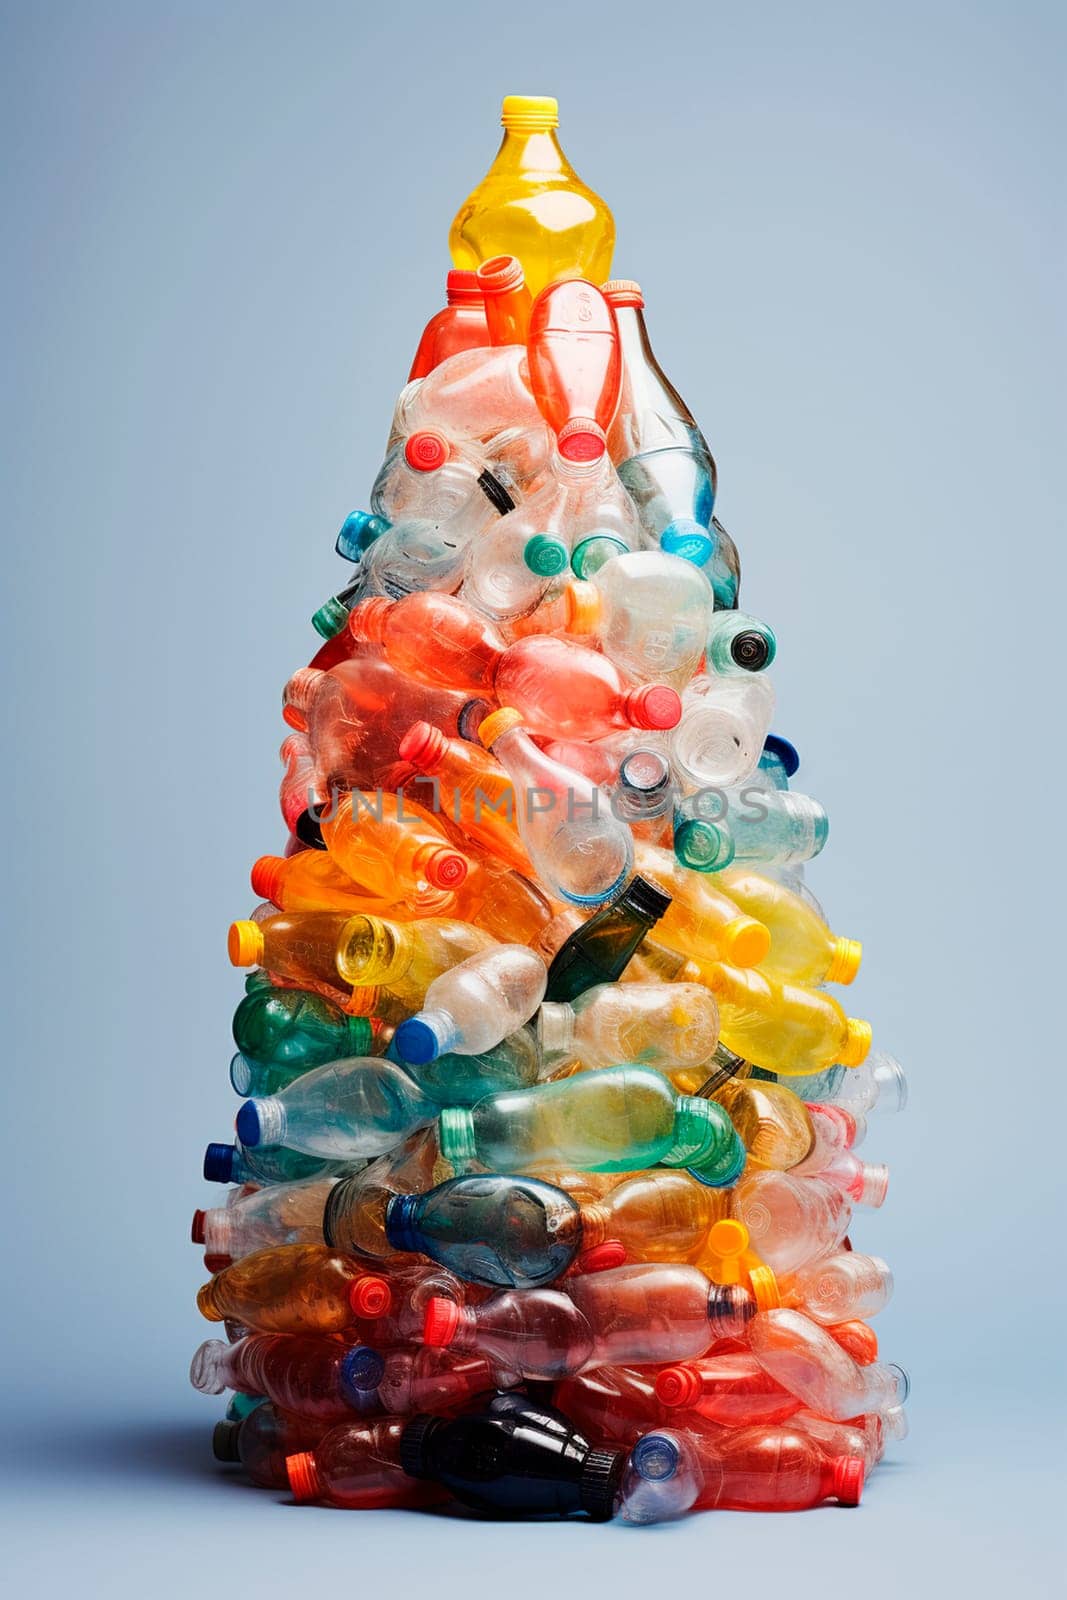 A pile of plastic bottles. Selective focus. color.